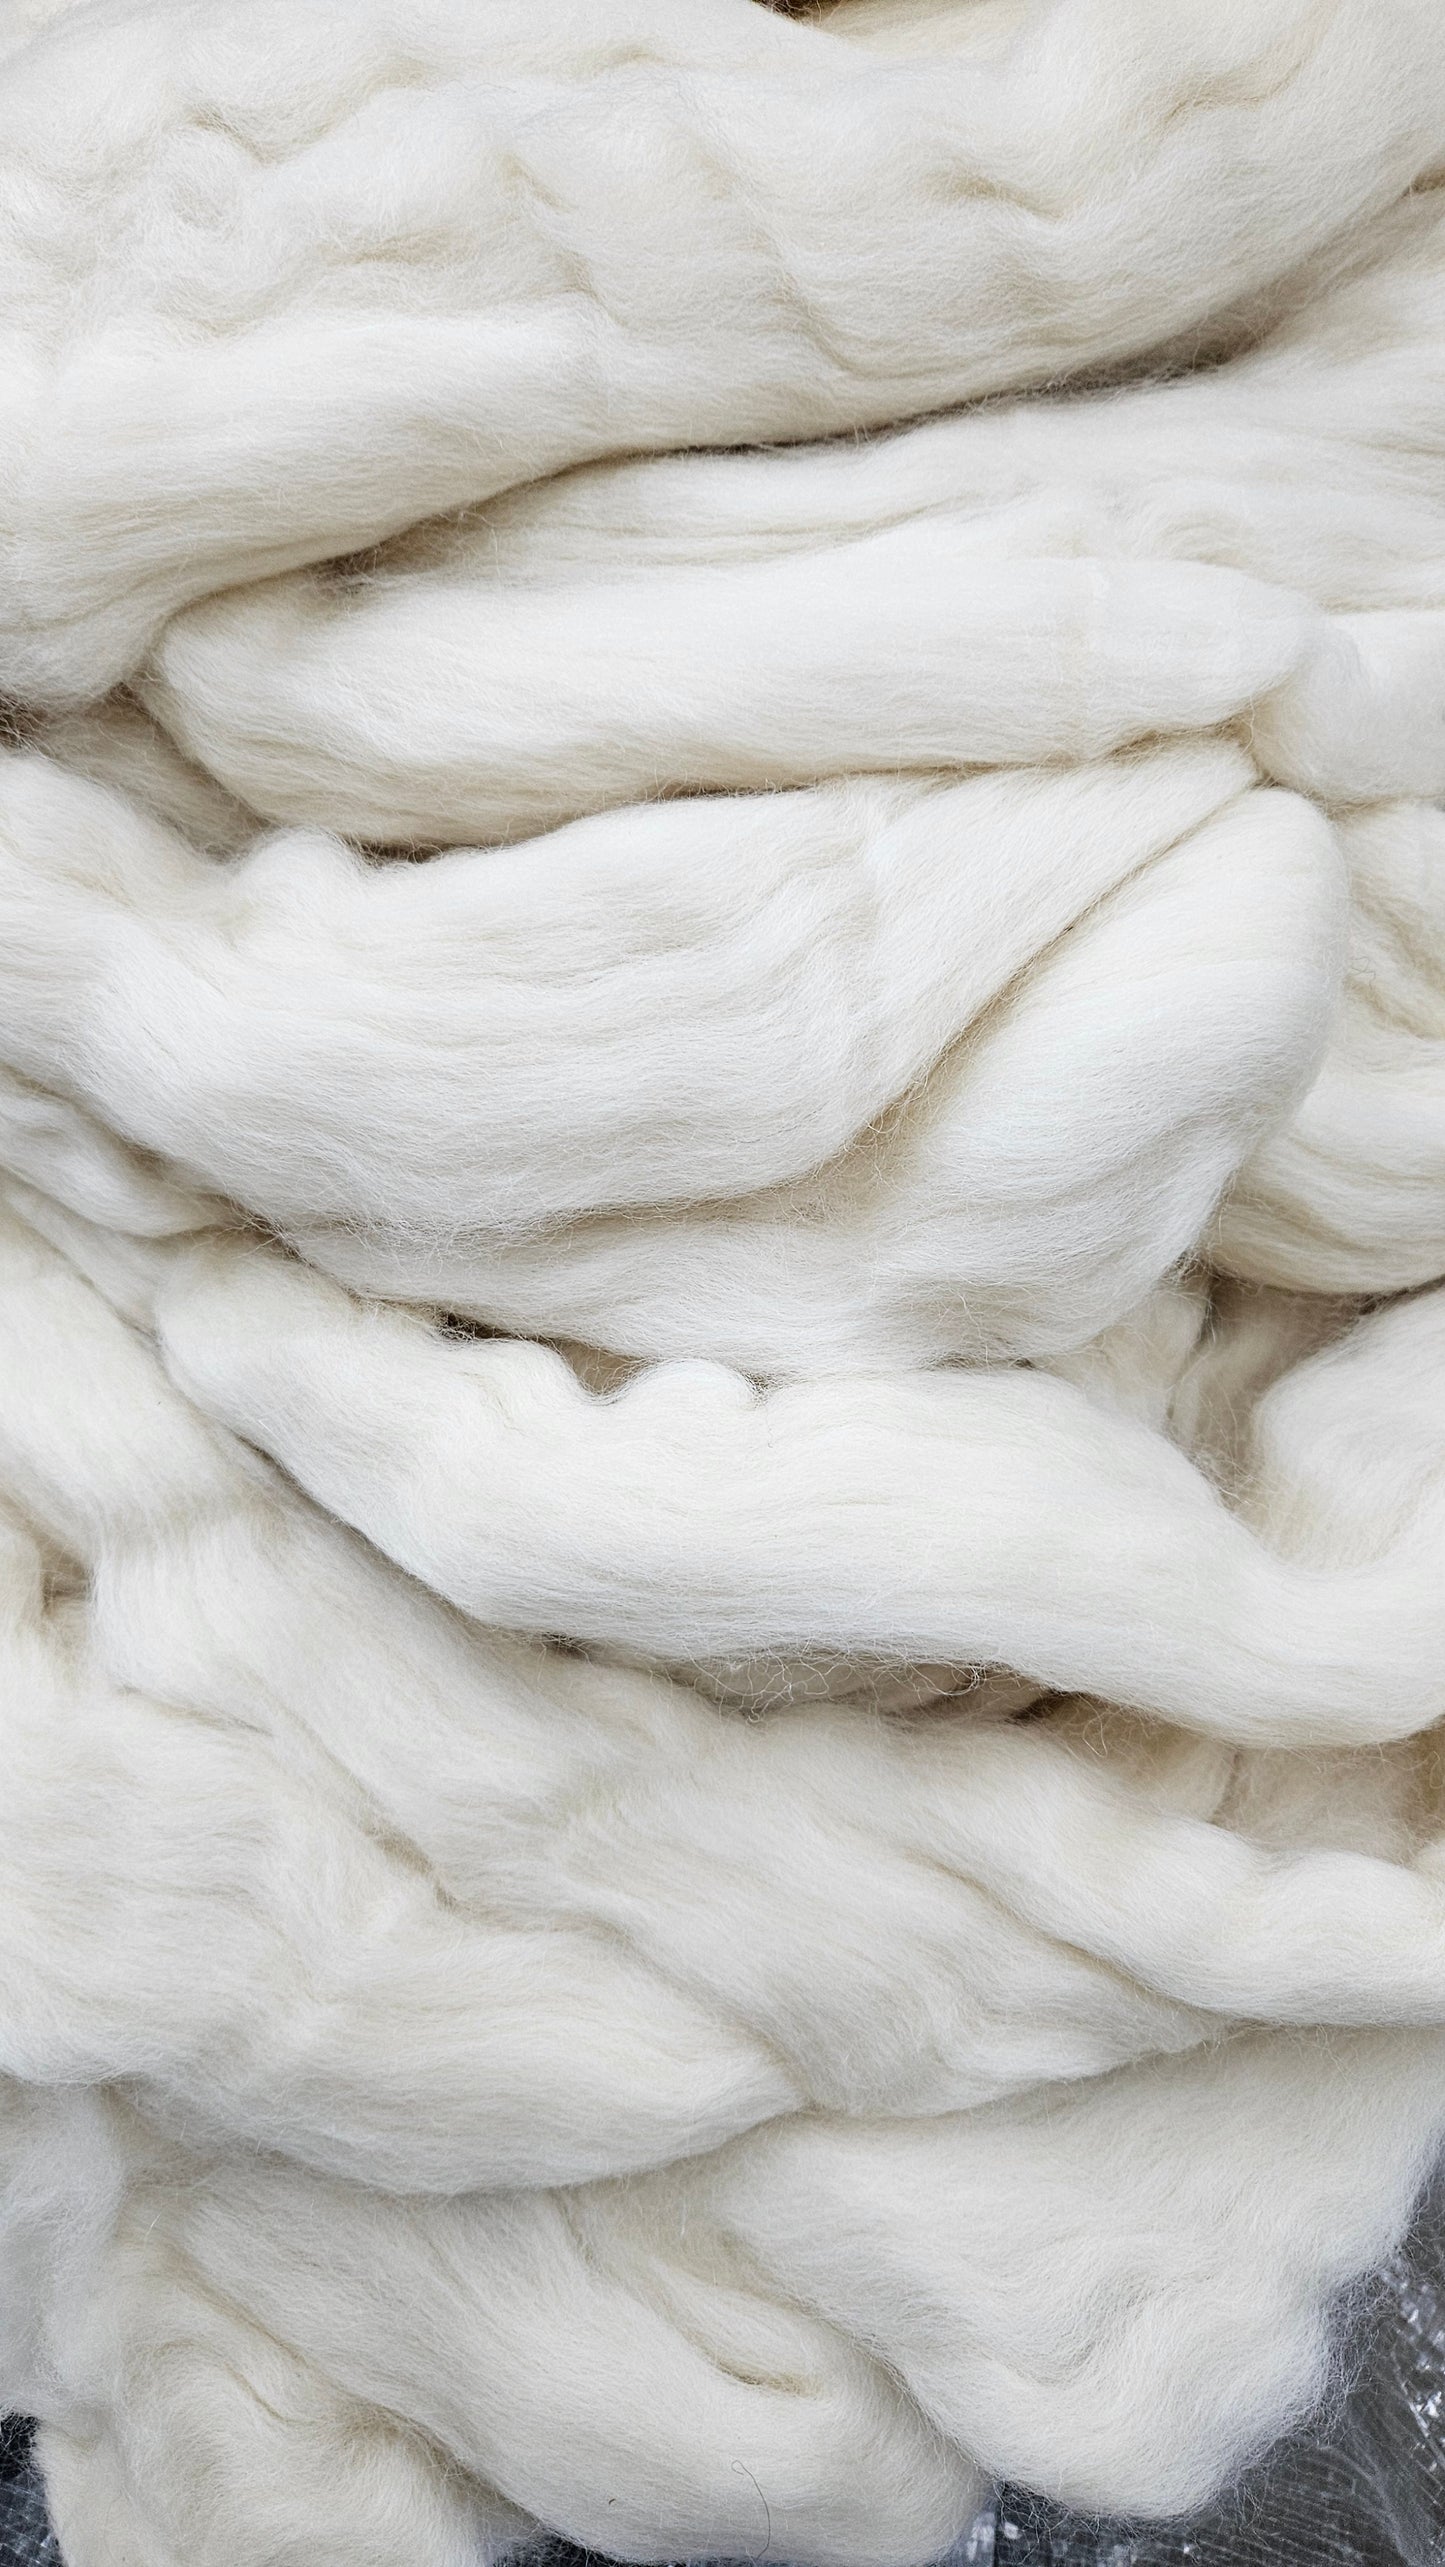 CORRIEDALE - Natural Wool Top Beginner Spinning Felting Carding Dyeing - 6 oz White